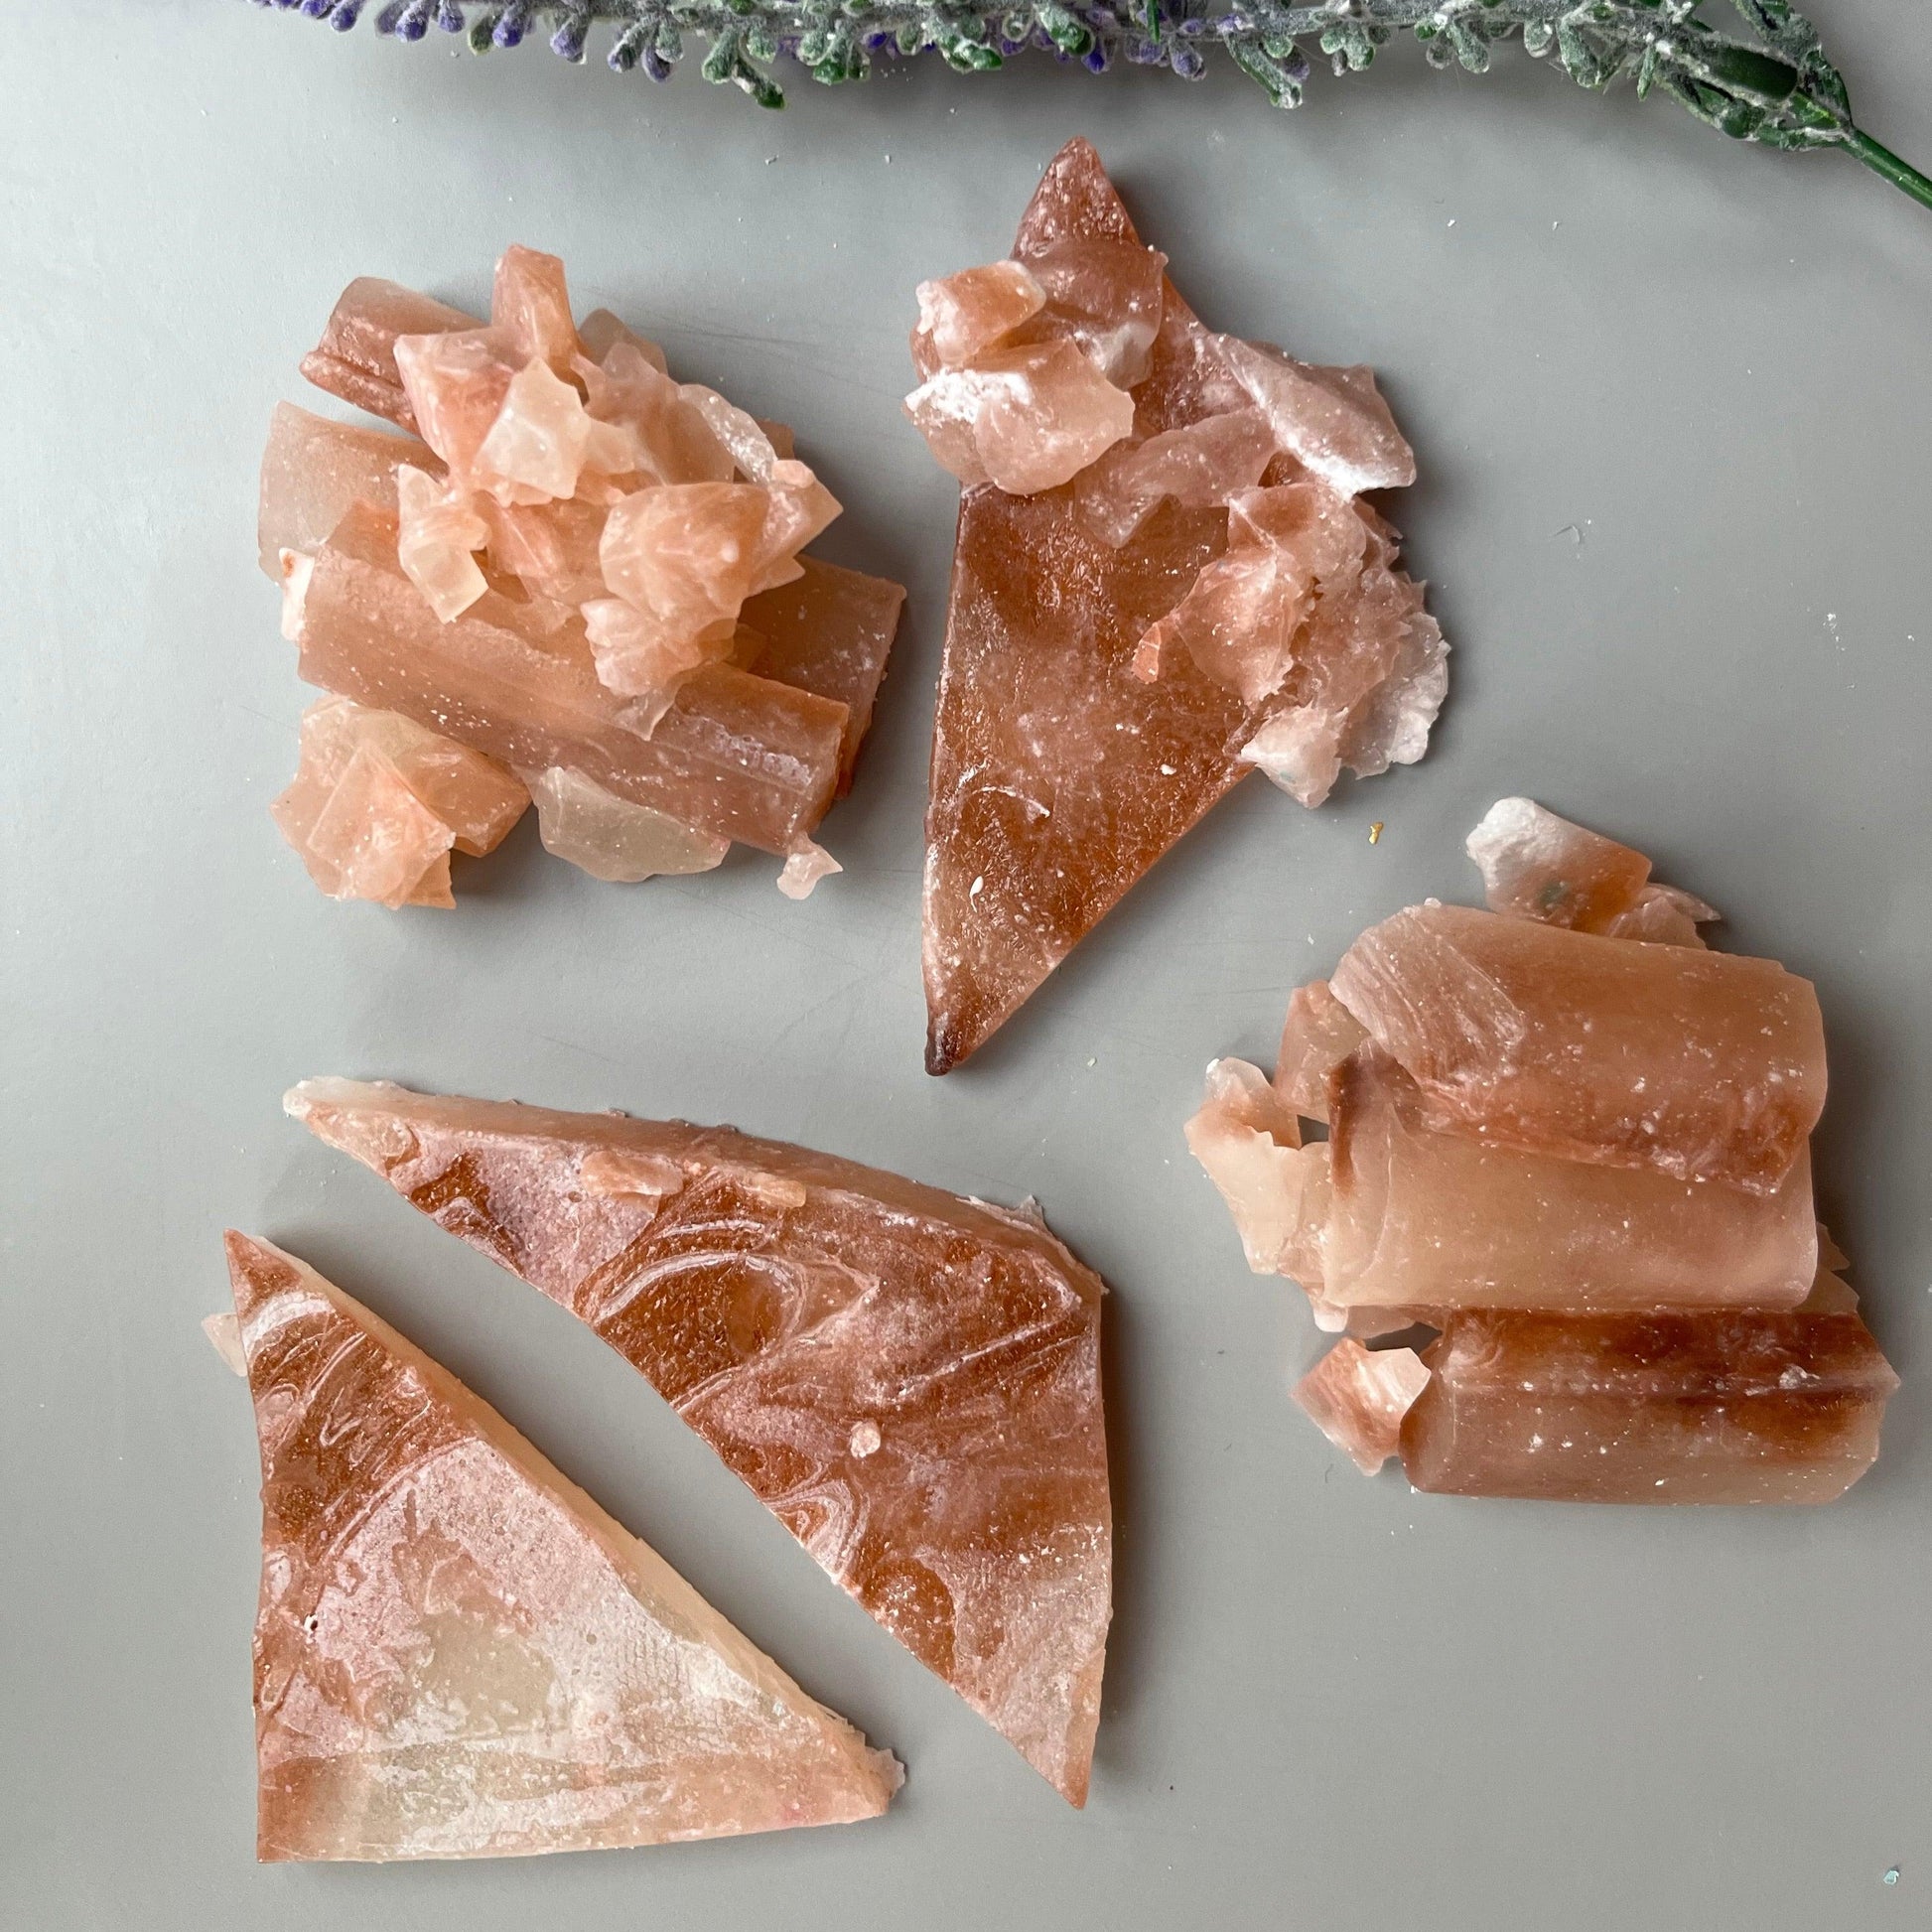 Edible Crystals 💎 Crunchy outside, jelly inside~ #foodasmr #cookingas, msshiandmrhe